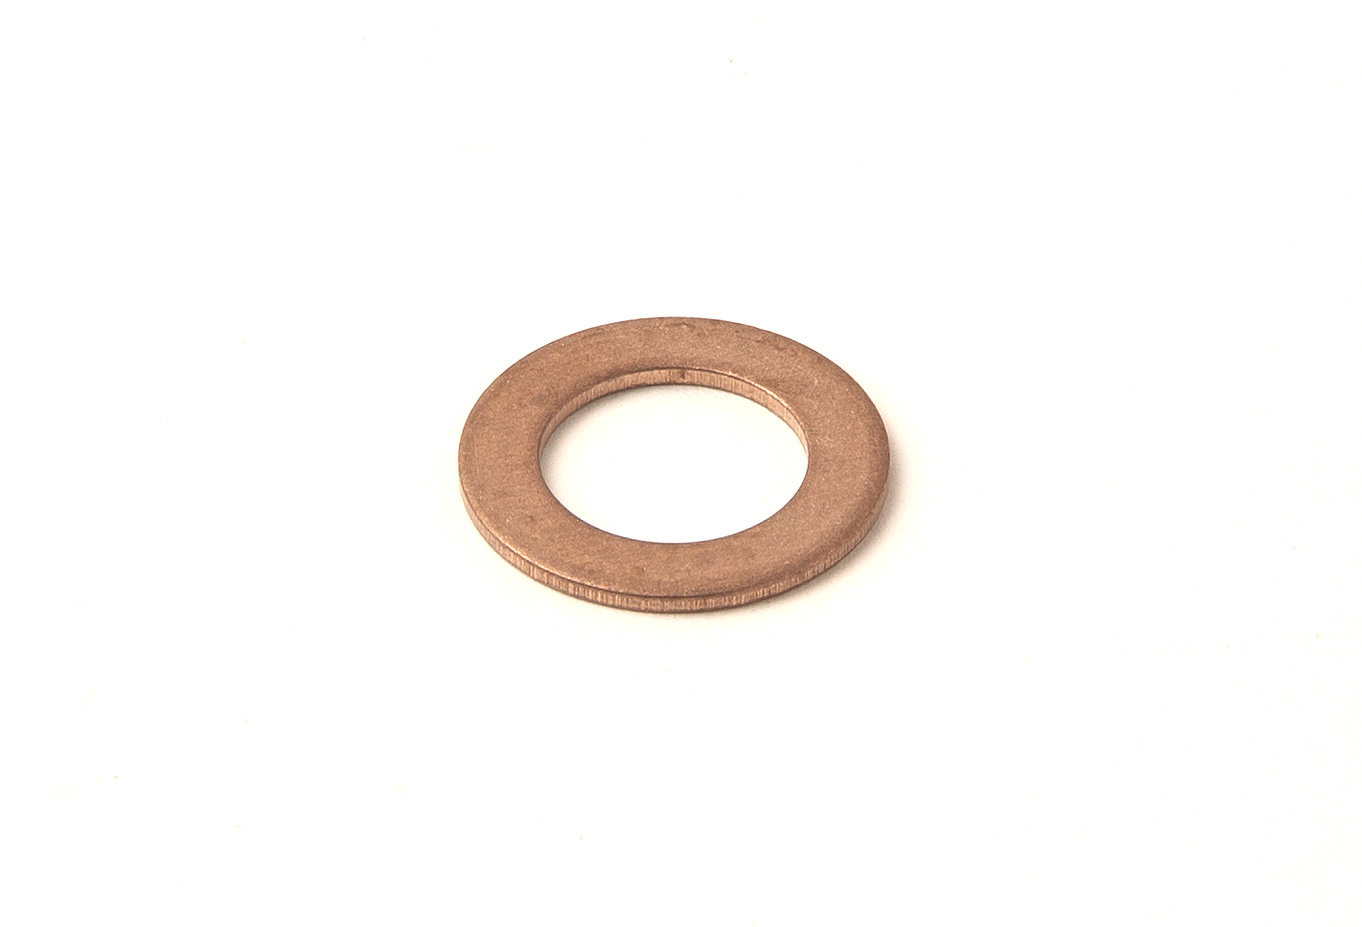 Kupferscheibe
Copper washer
Rondelle en cuivre
Disco de cobre